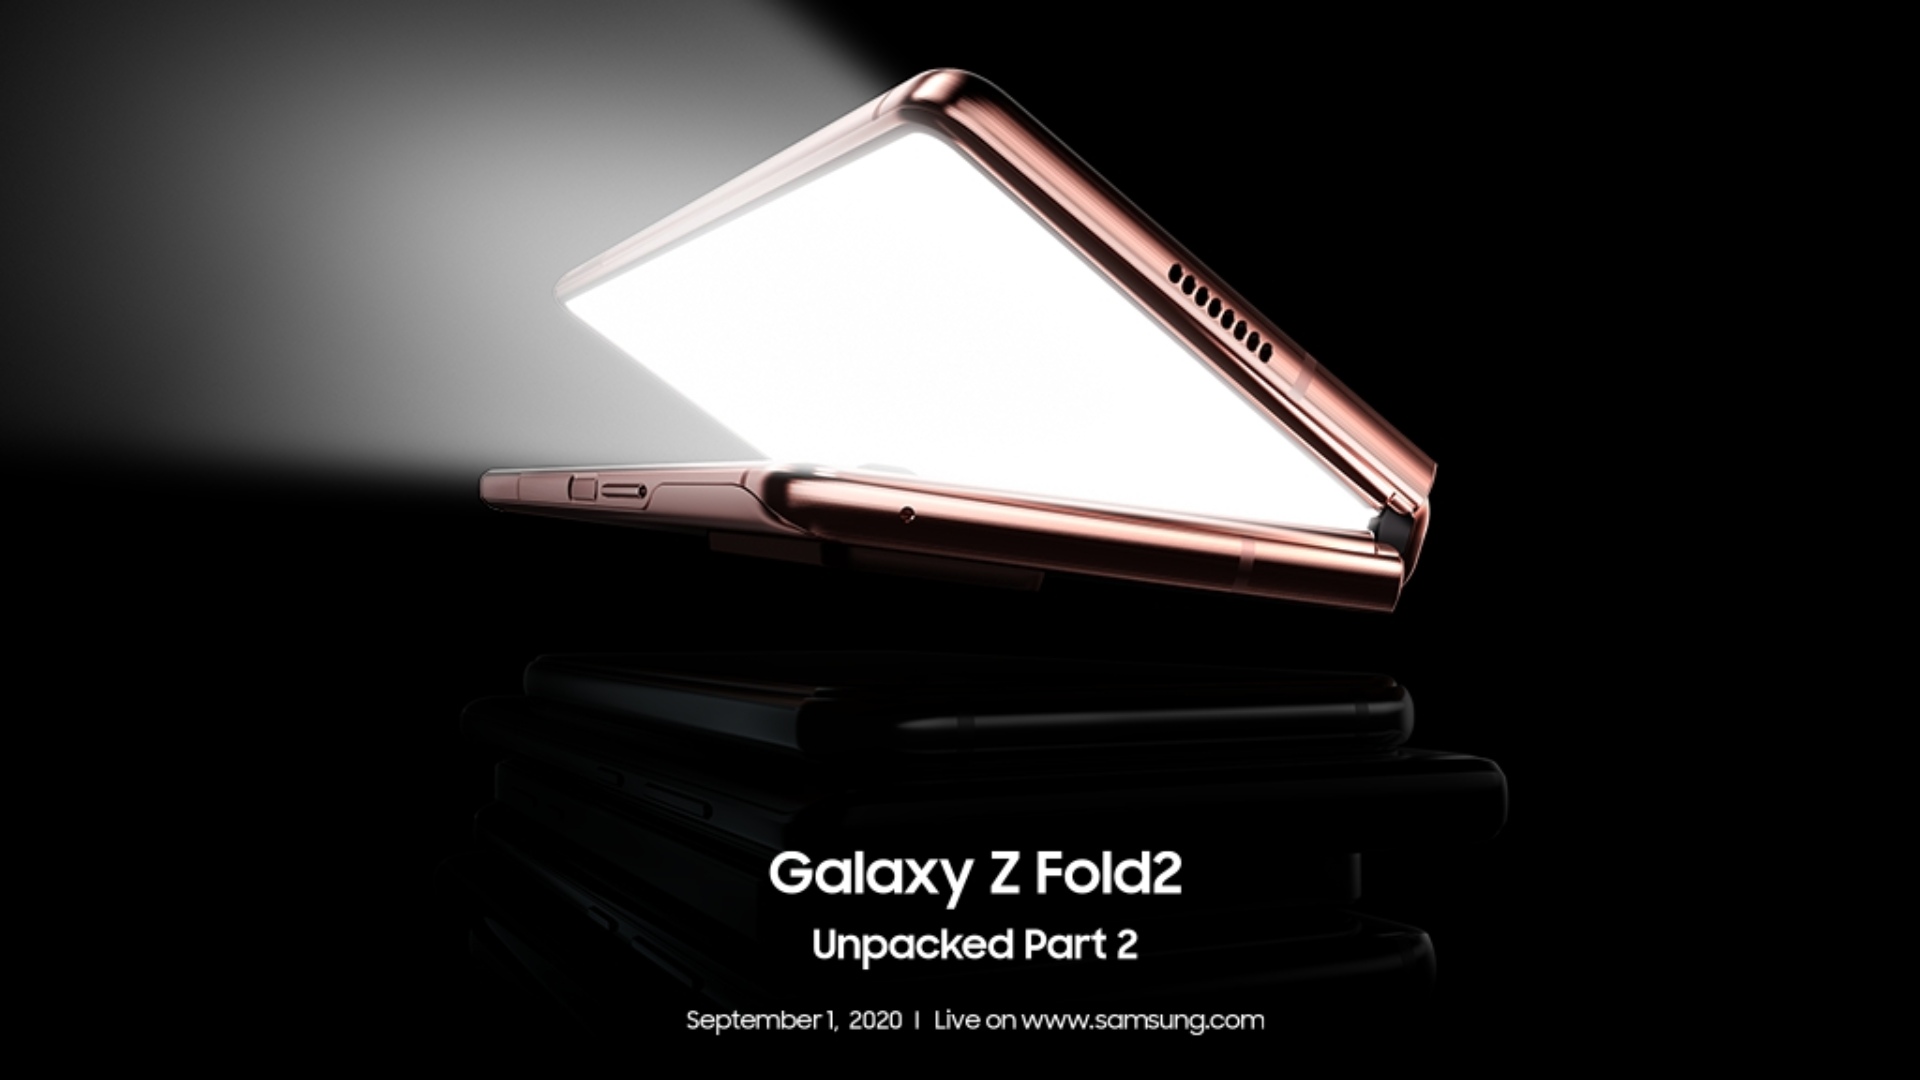 Samsung Galaxy Z Fold2 Unpacked Part 2 invite